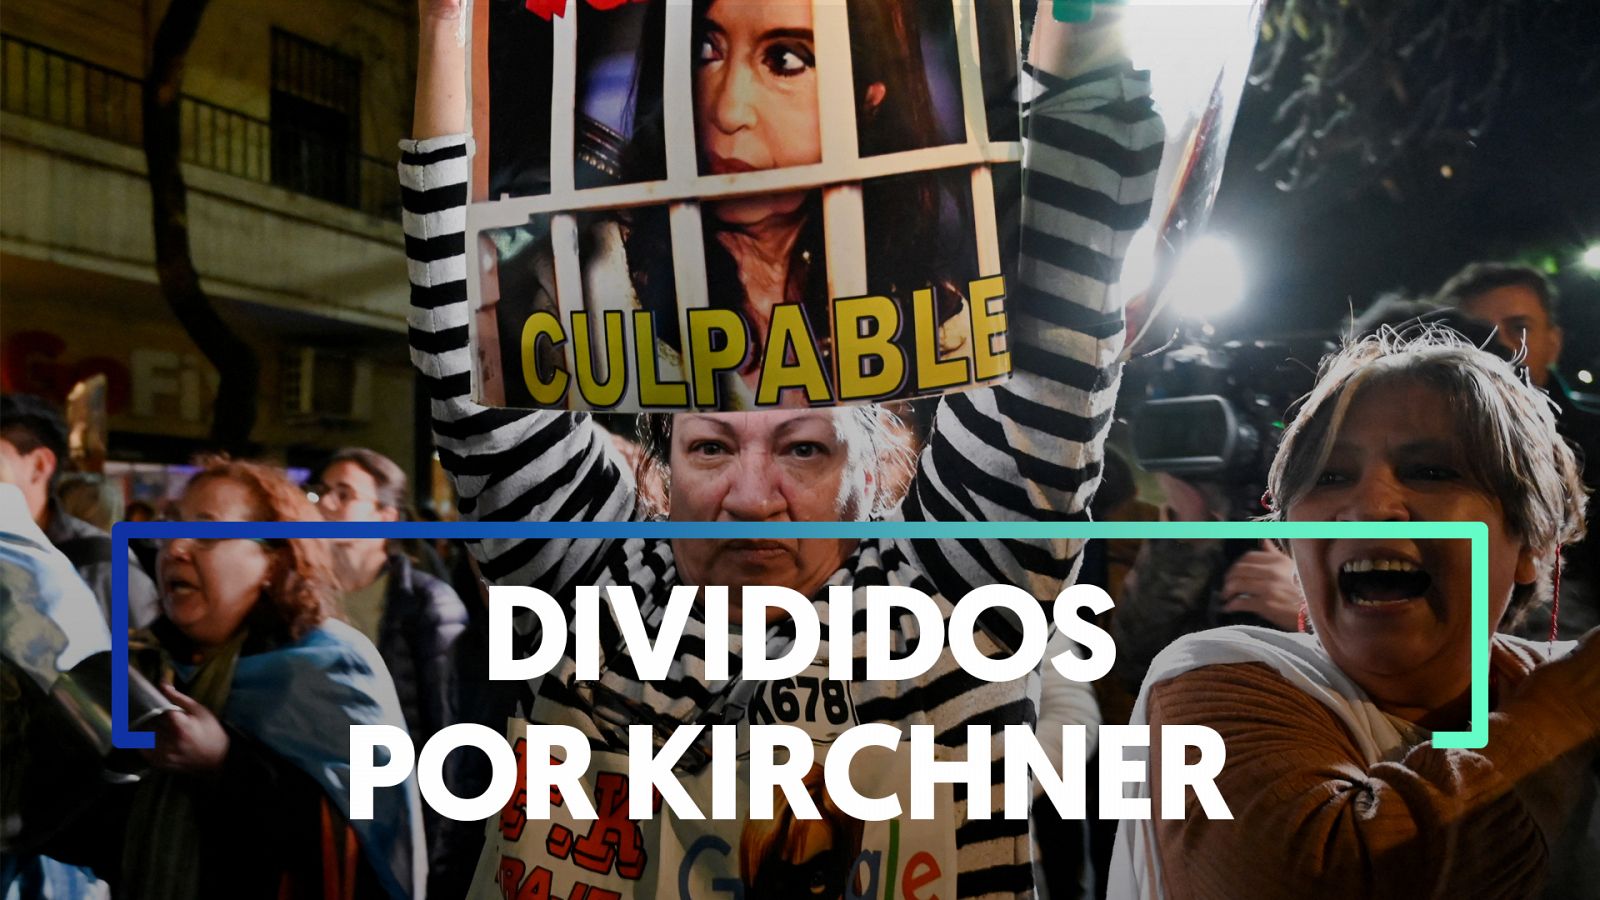 Simpatizantes y opositores de Cristina Fernández de Kirchner se enfrentan en protestas